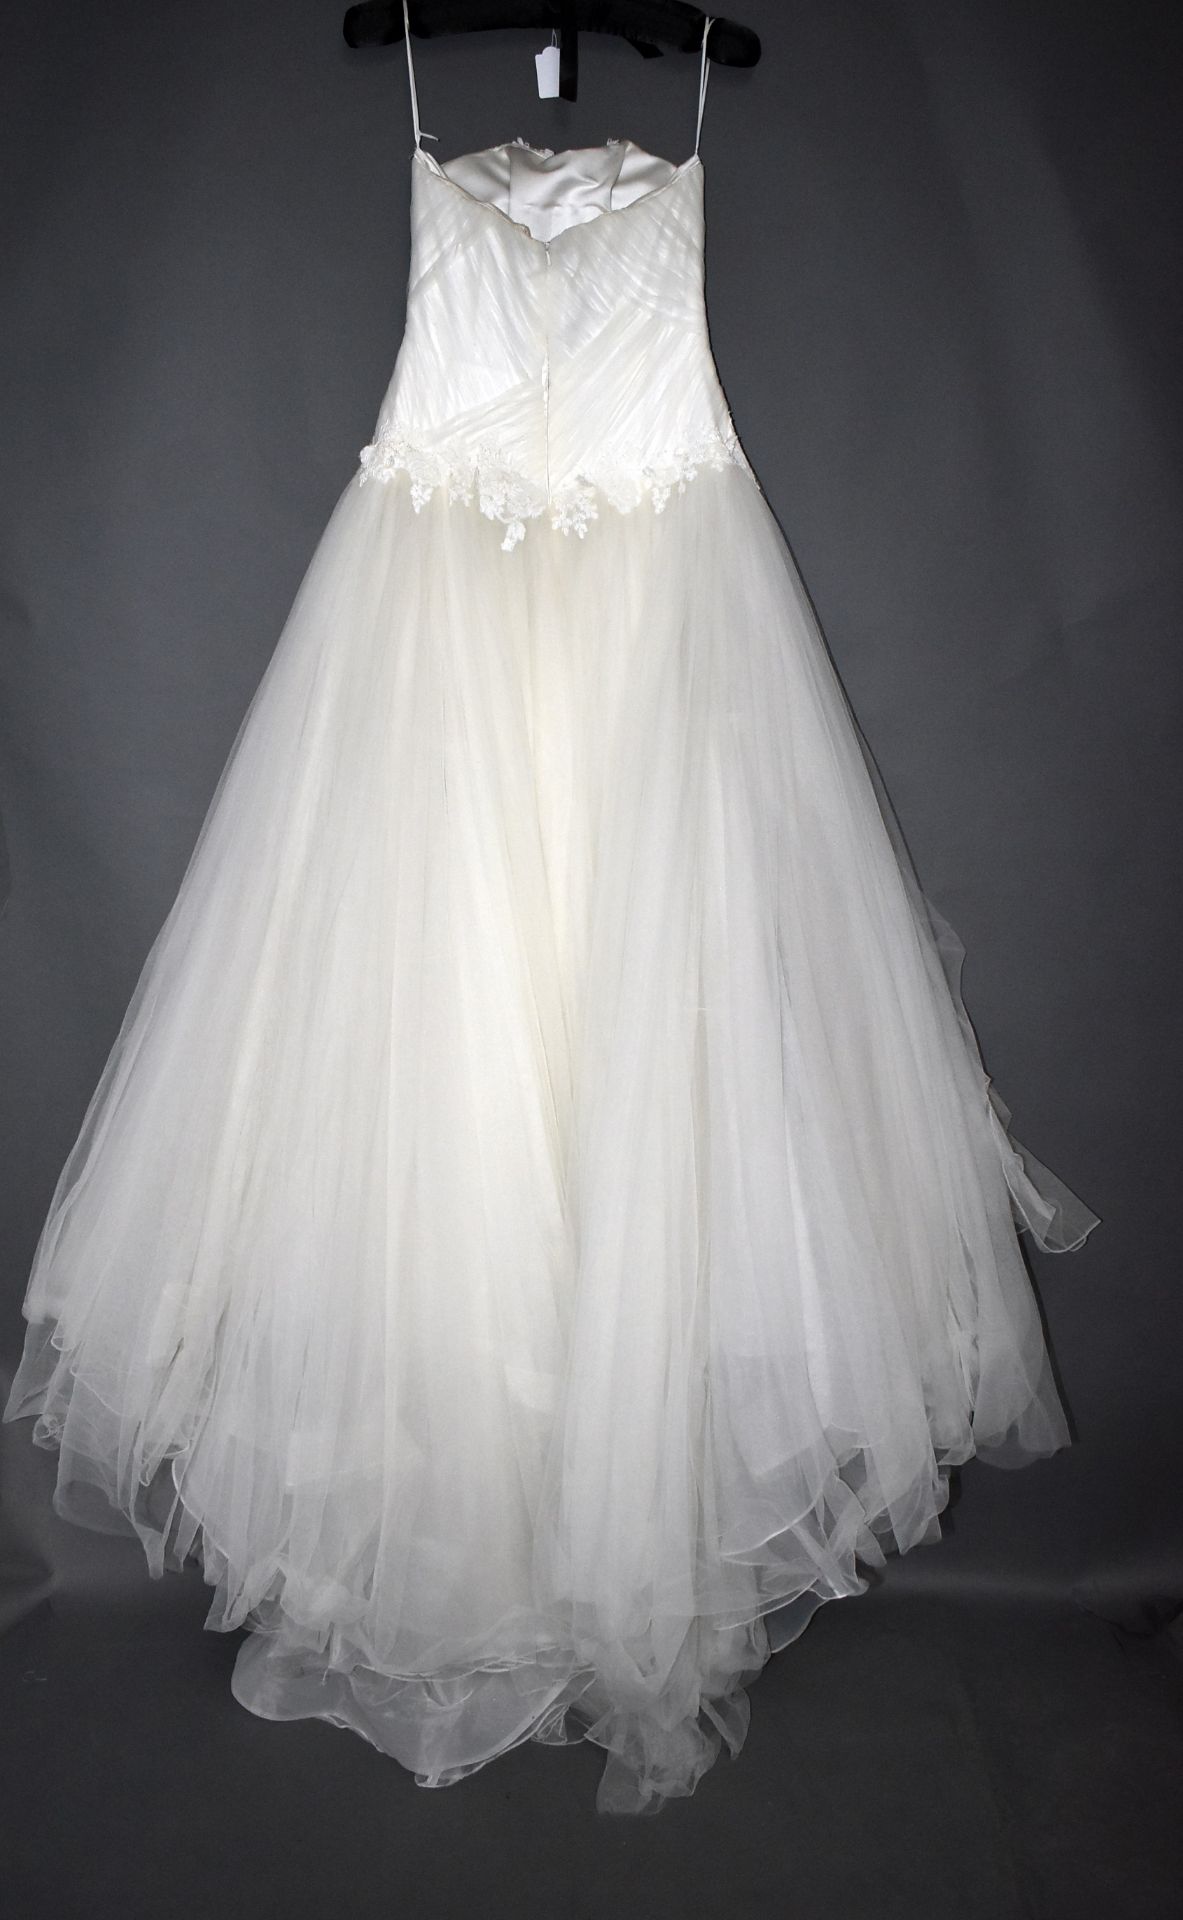 1 x LUSAN MANDONGUS Strapless Chiffon And Lace Designer Wedding Dress Bridal Gown RRP £2,600 UK 12 - Image 3 of 6